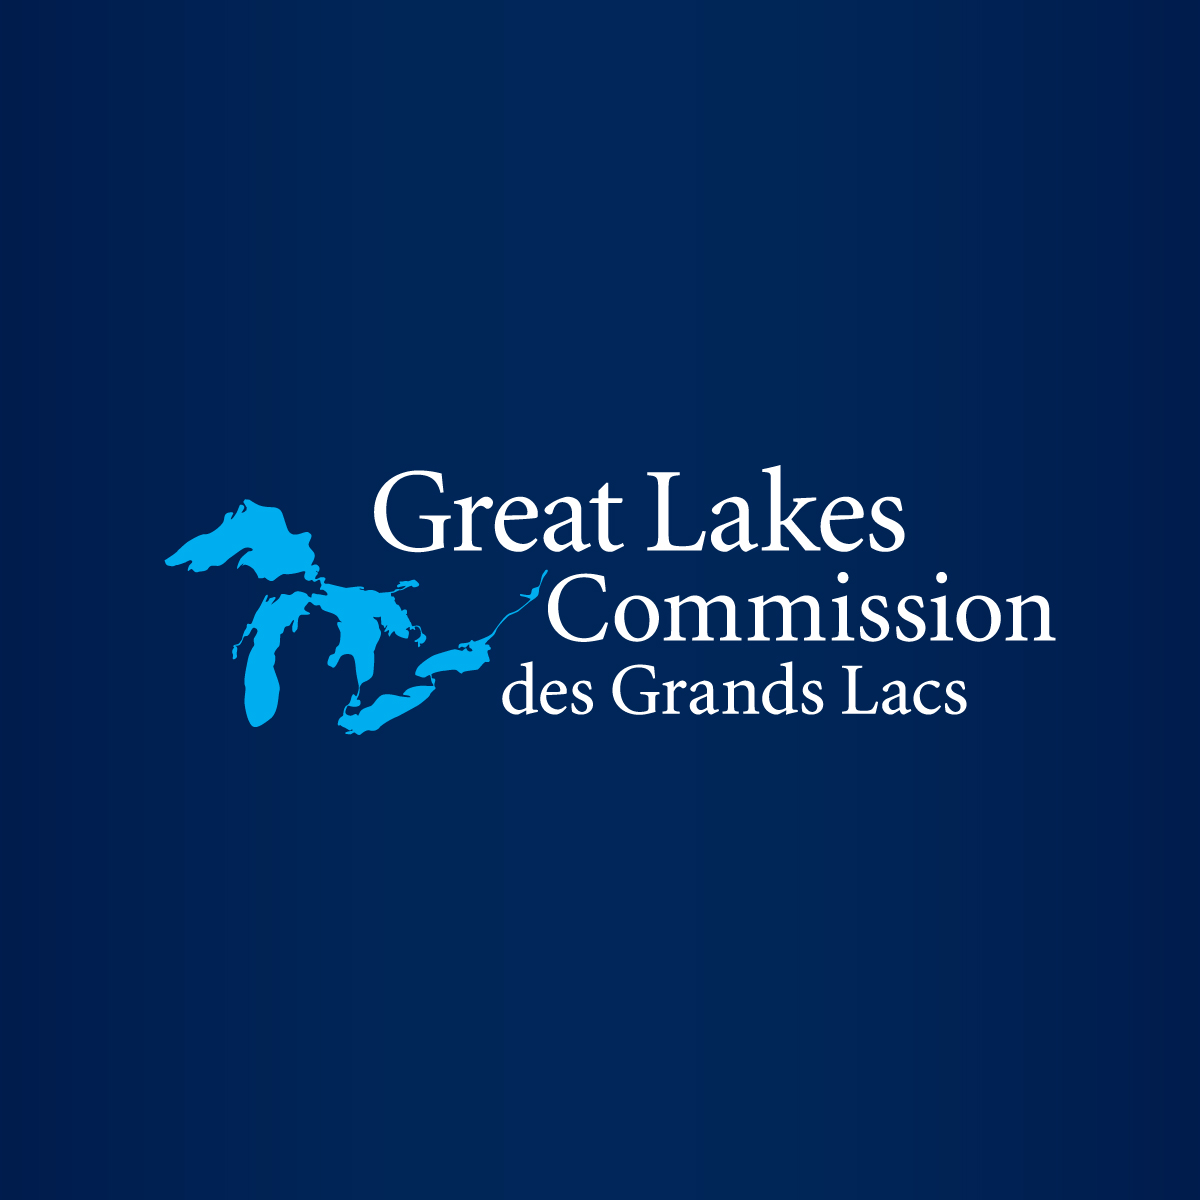 ‘We are sleepwalking towards disaster’ on Lake Erie, environmental group says